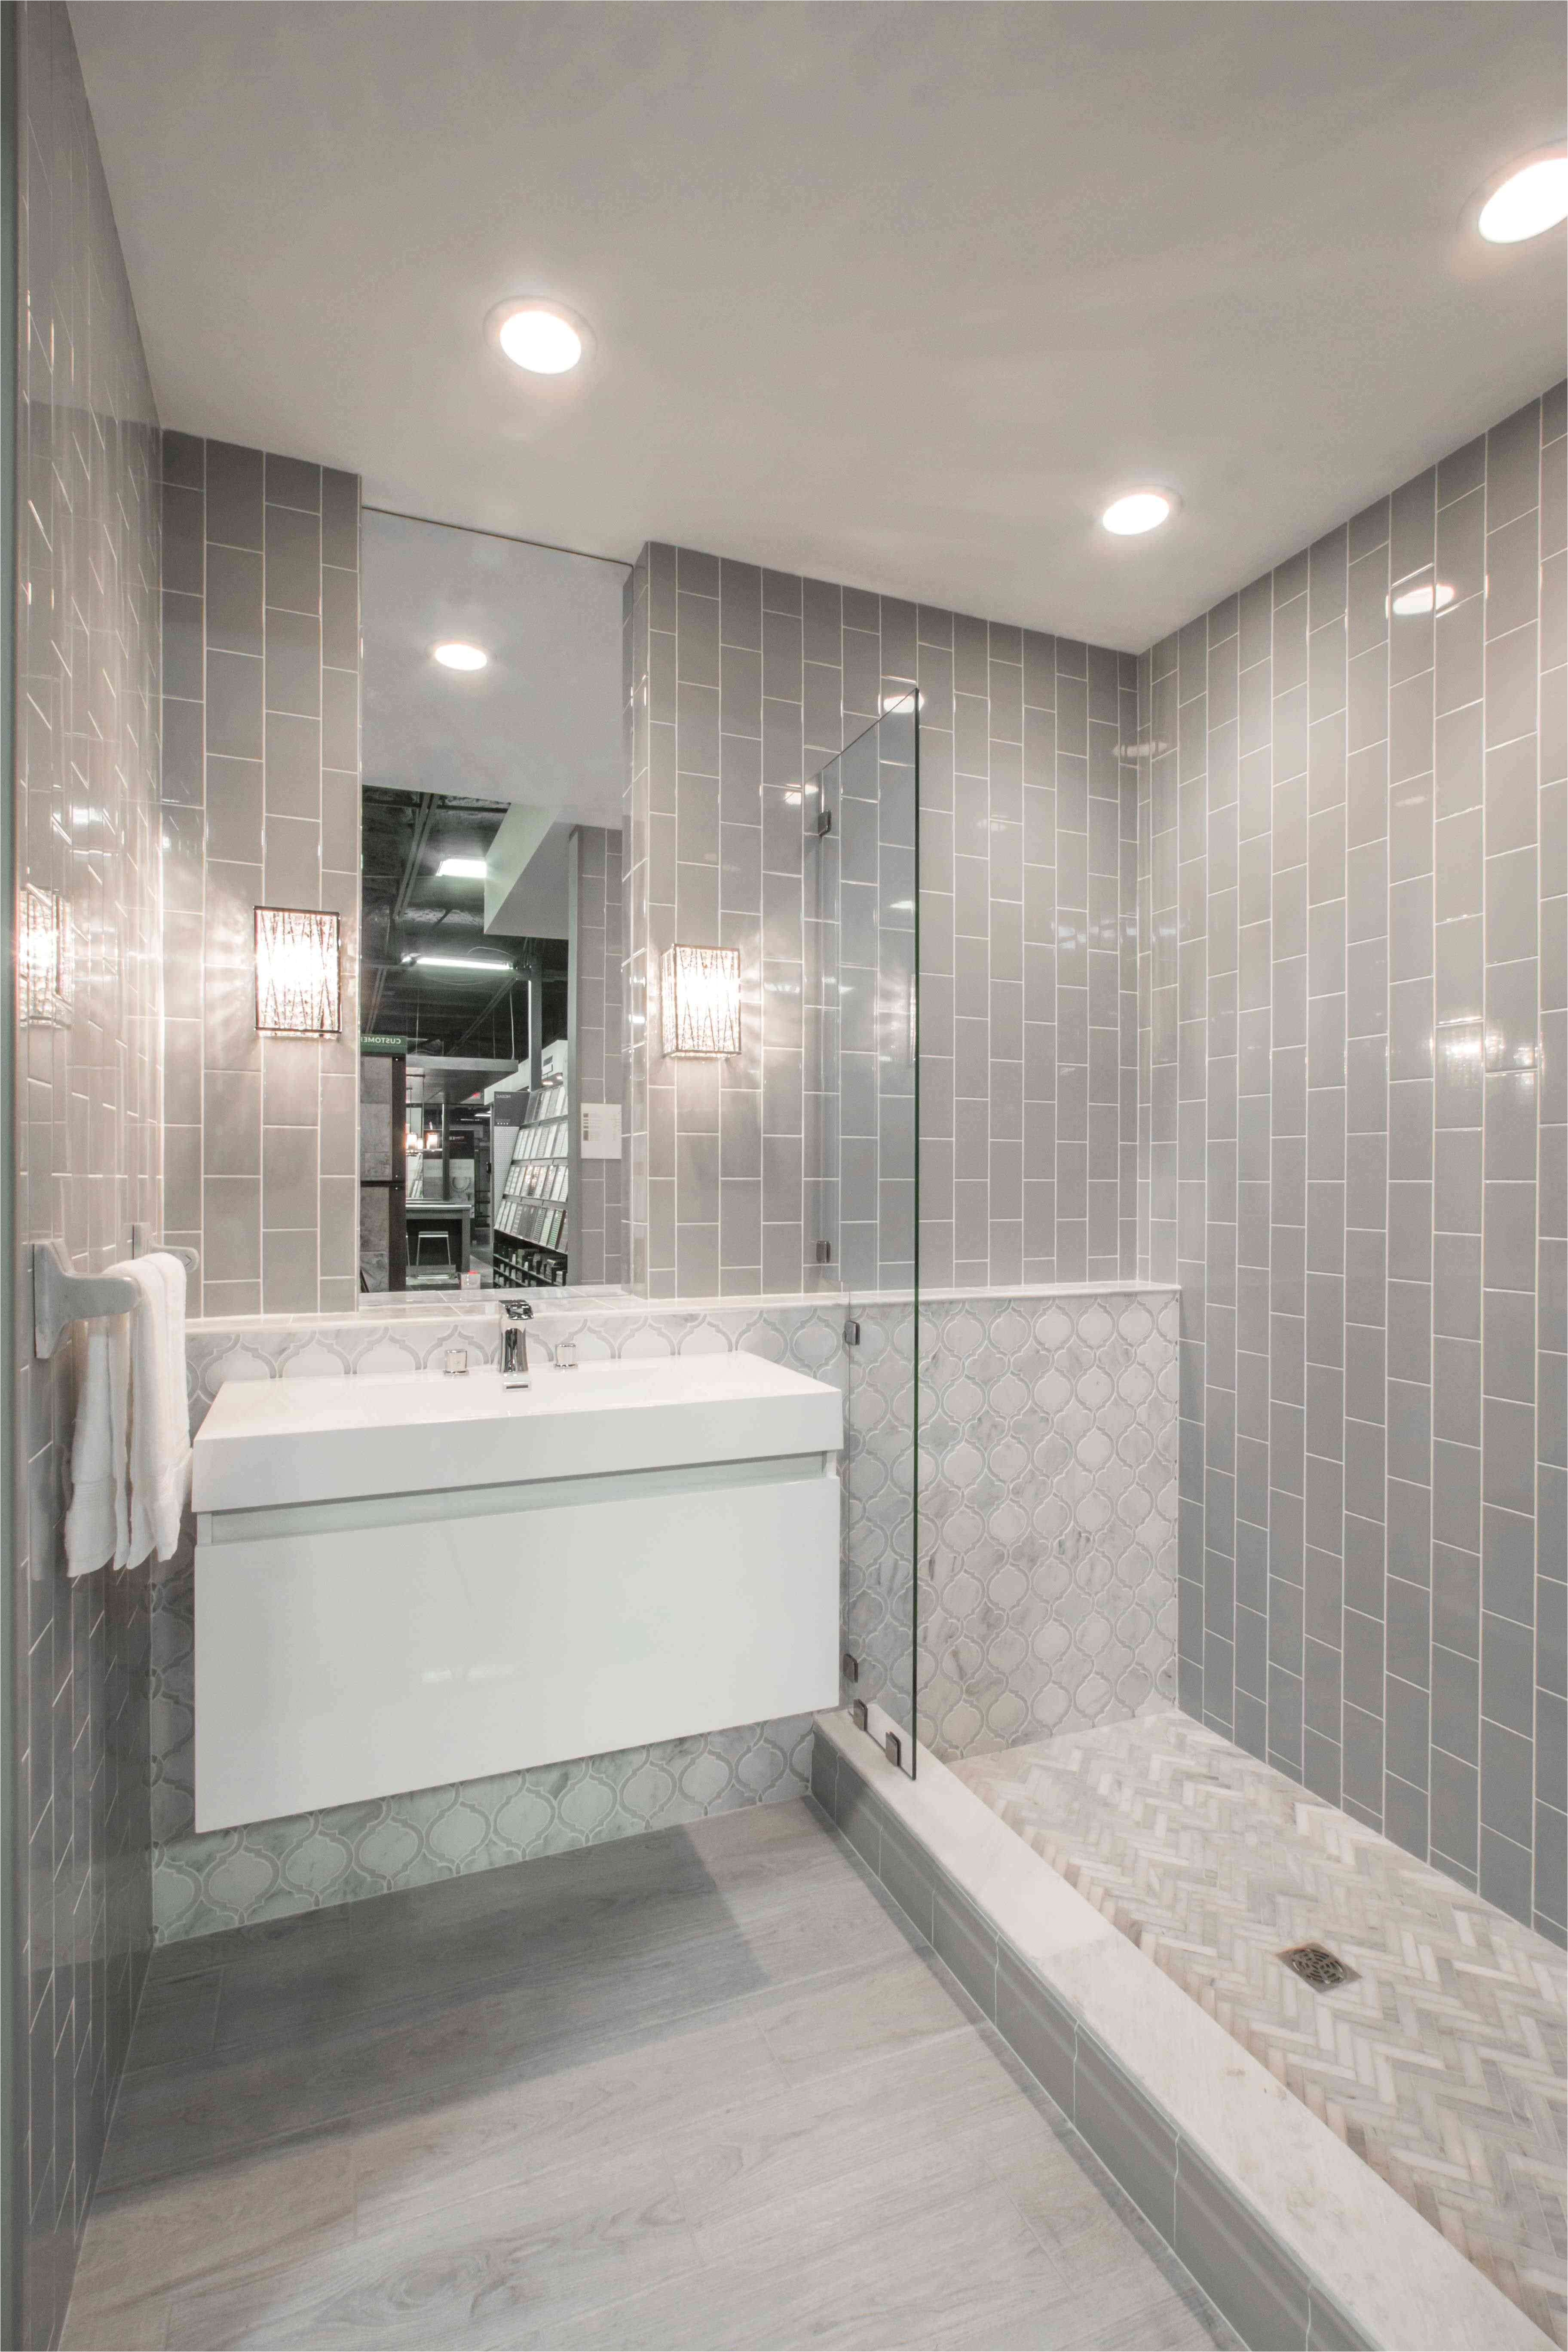 bathtub lowes inspirational lowes bathtub surround best lowes bathroom shower tile luxury